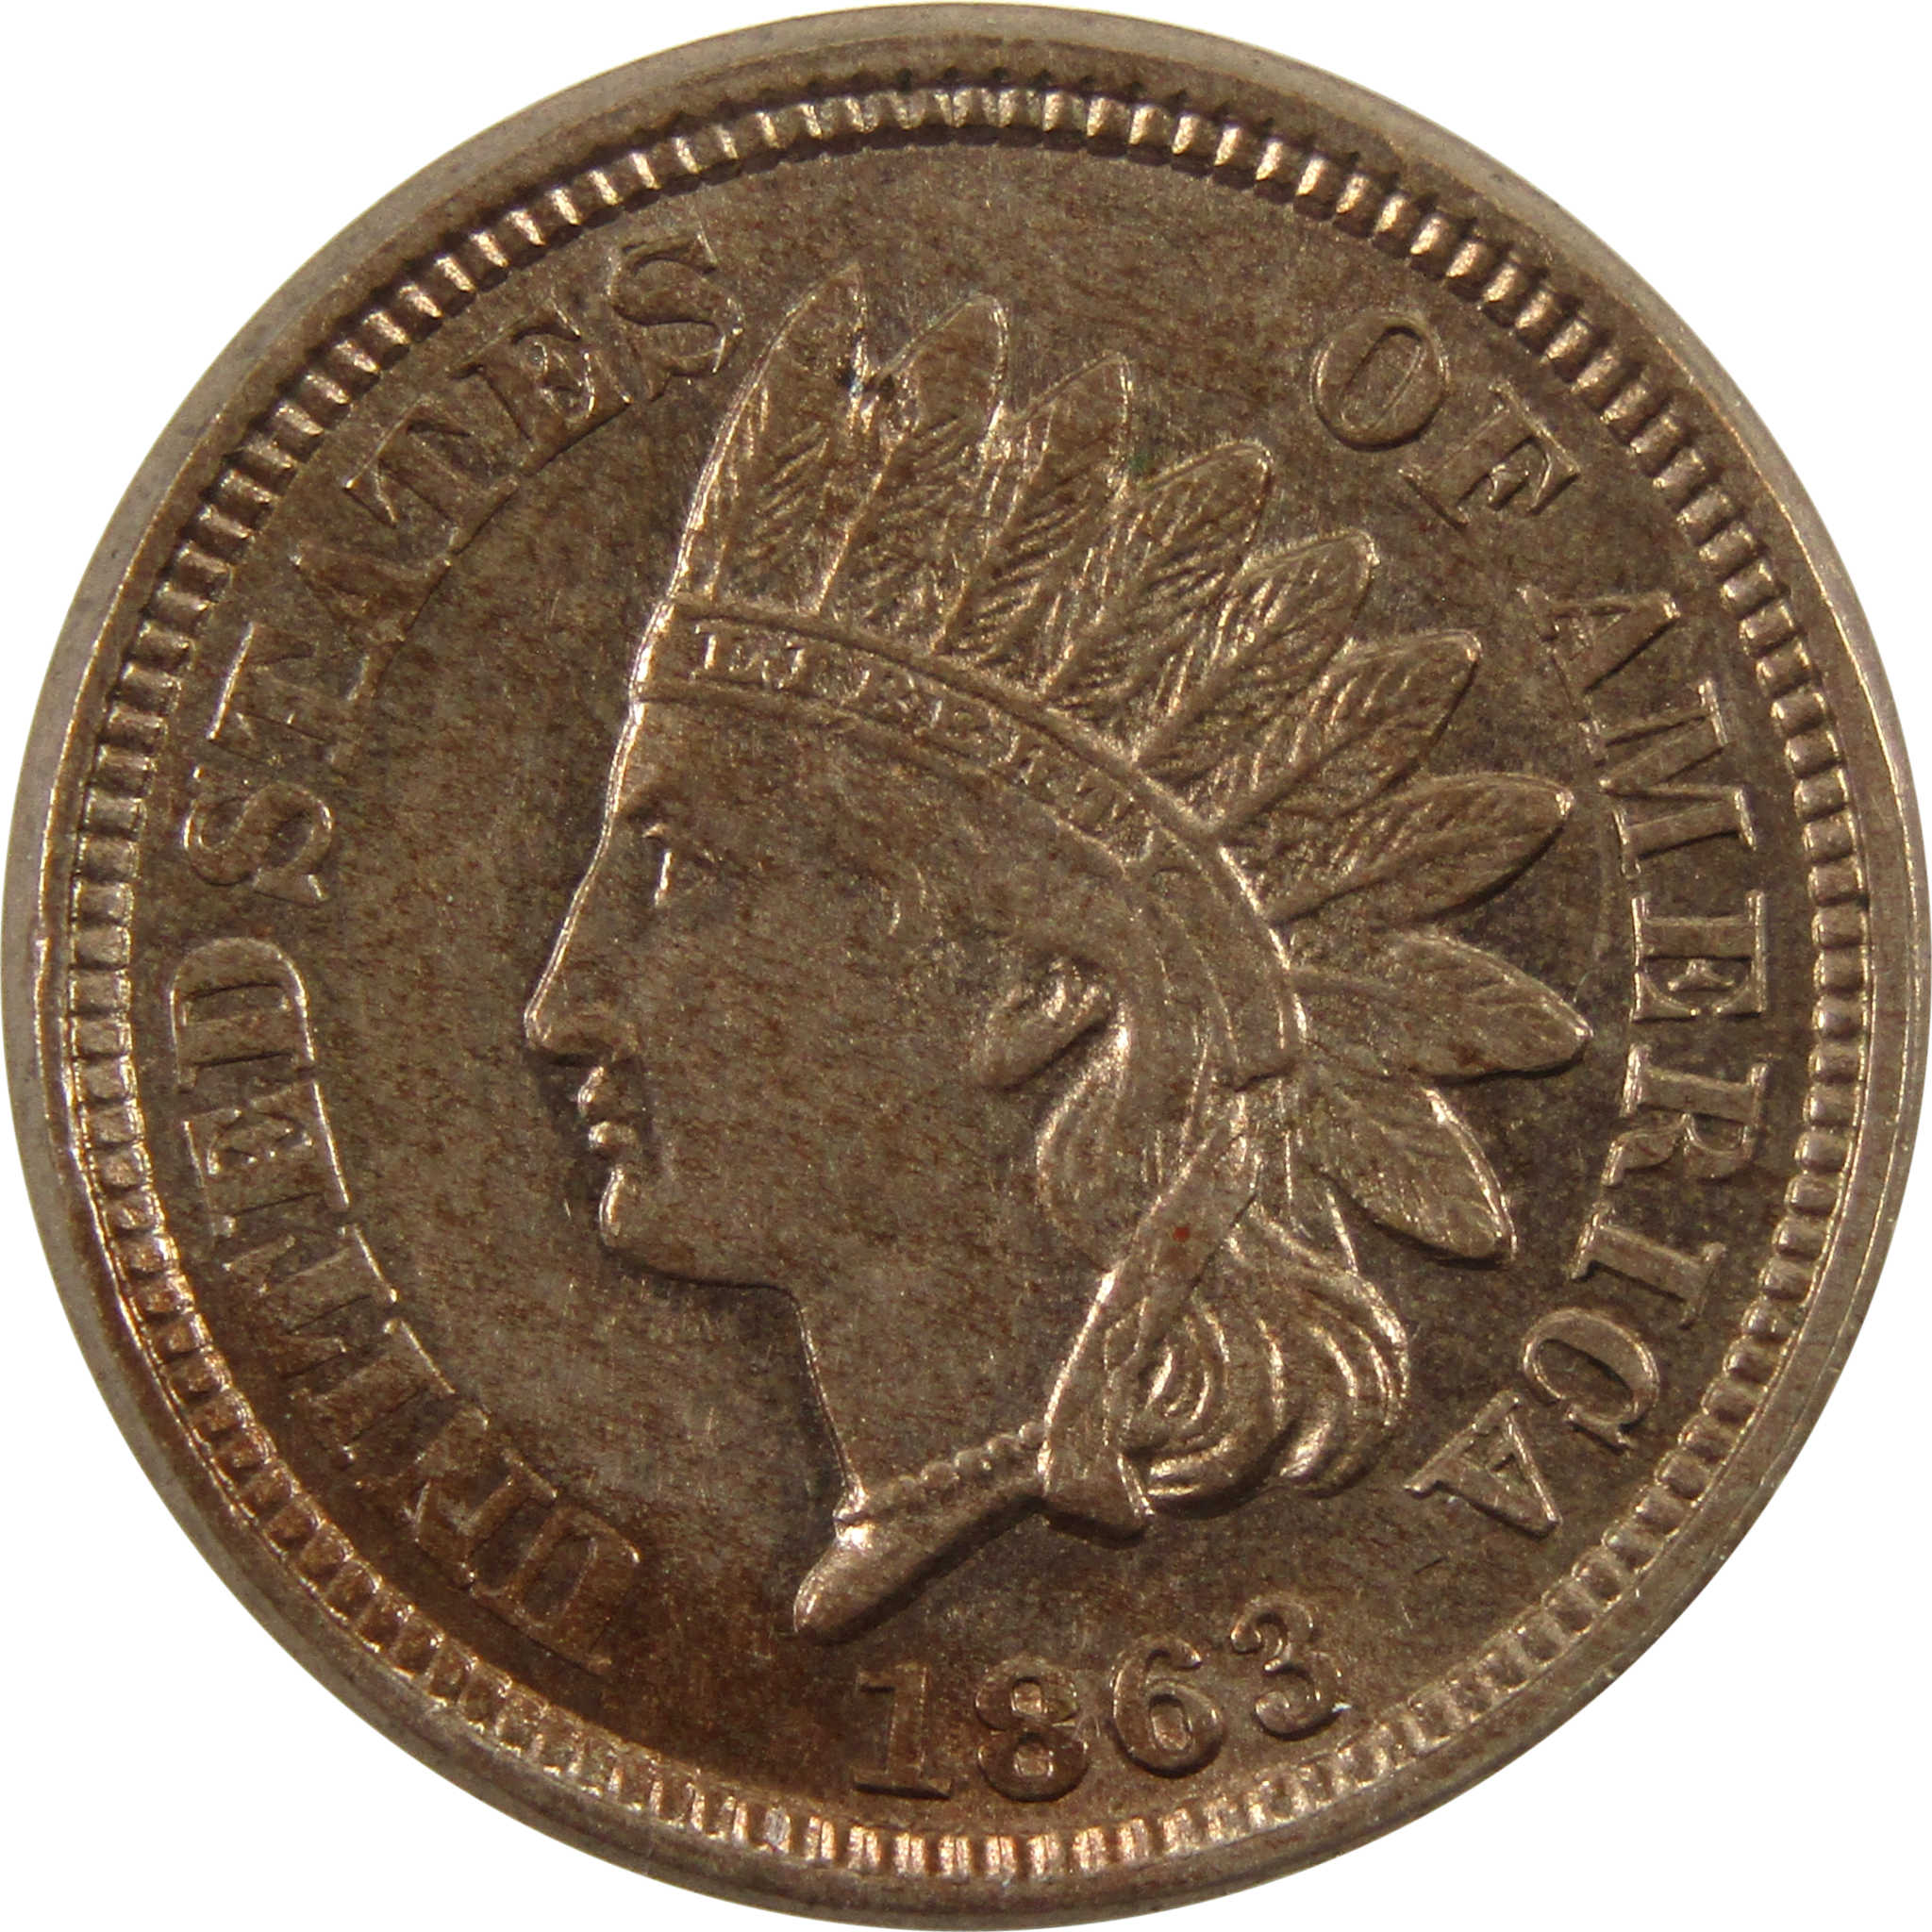 1863 Indian Head Cent Borderline Unc Copper-Nickel Penny 1c SKU:I10683